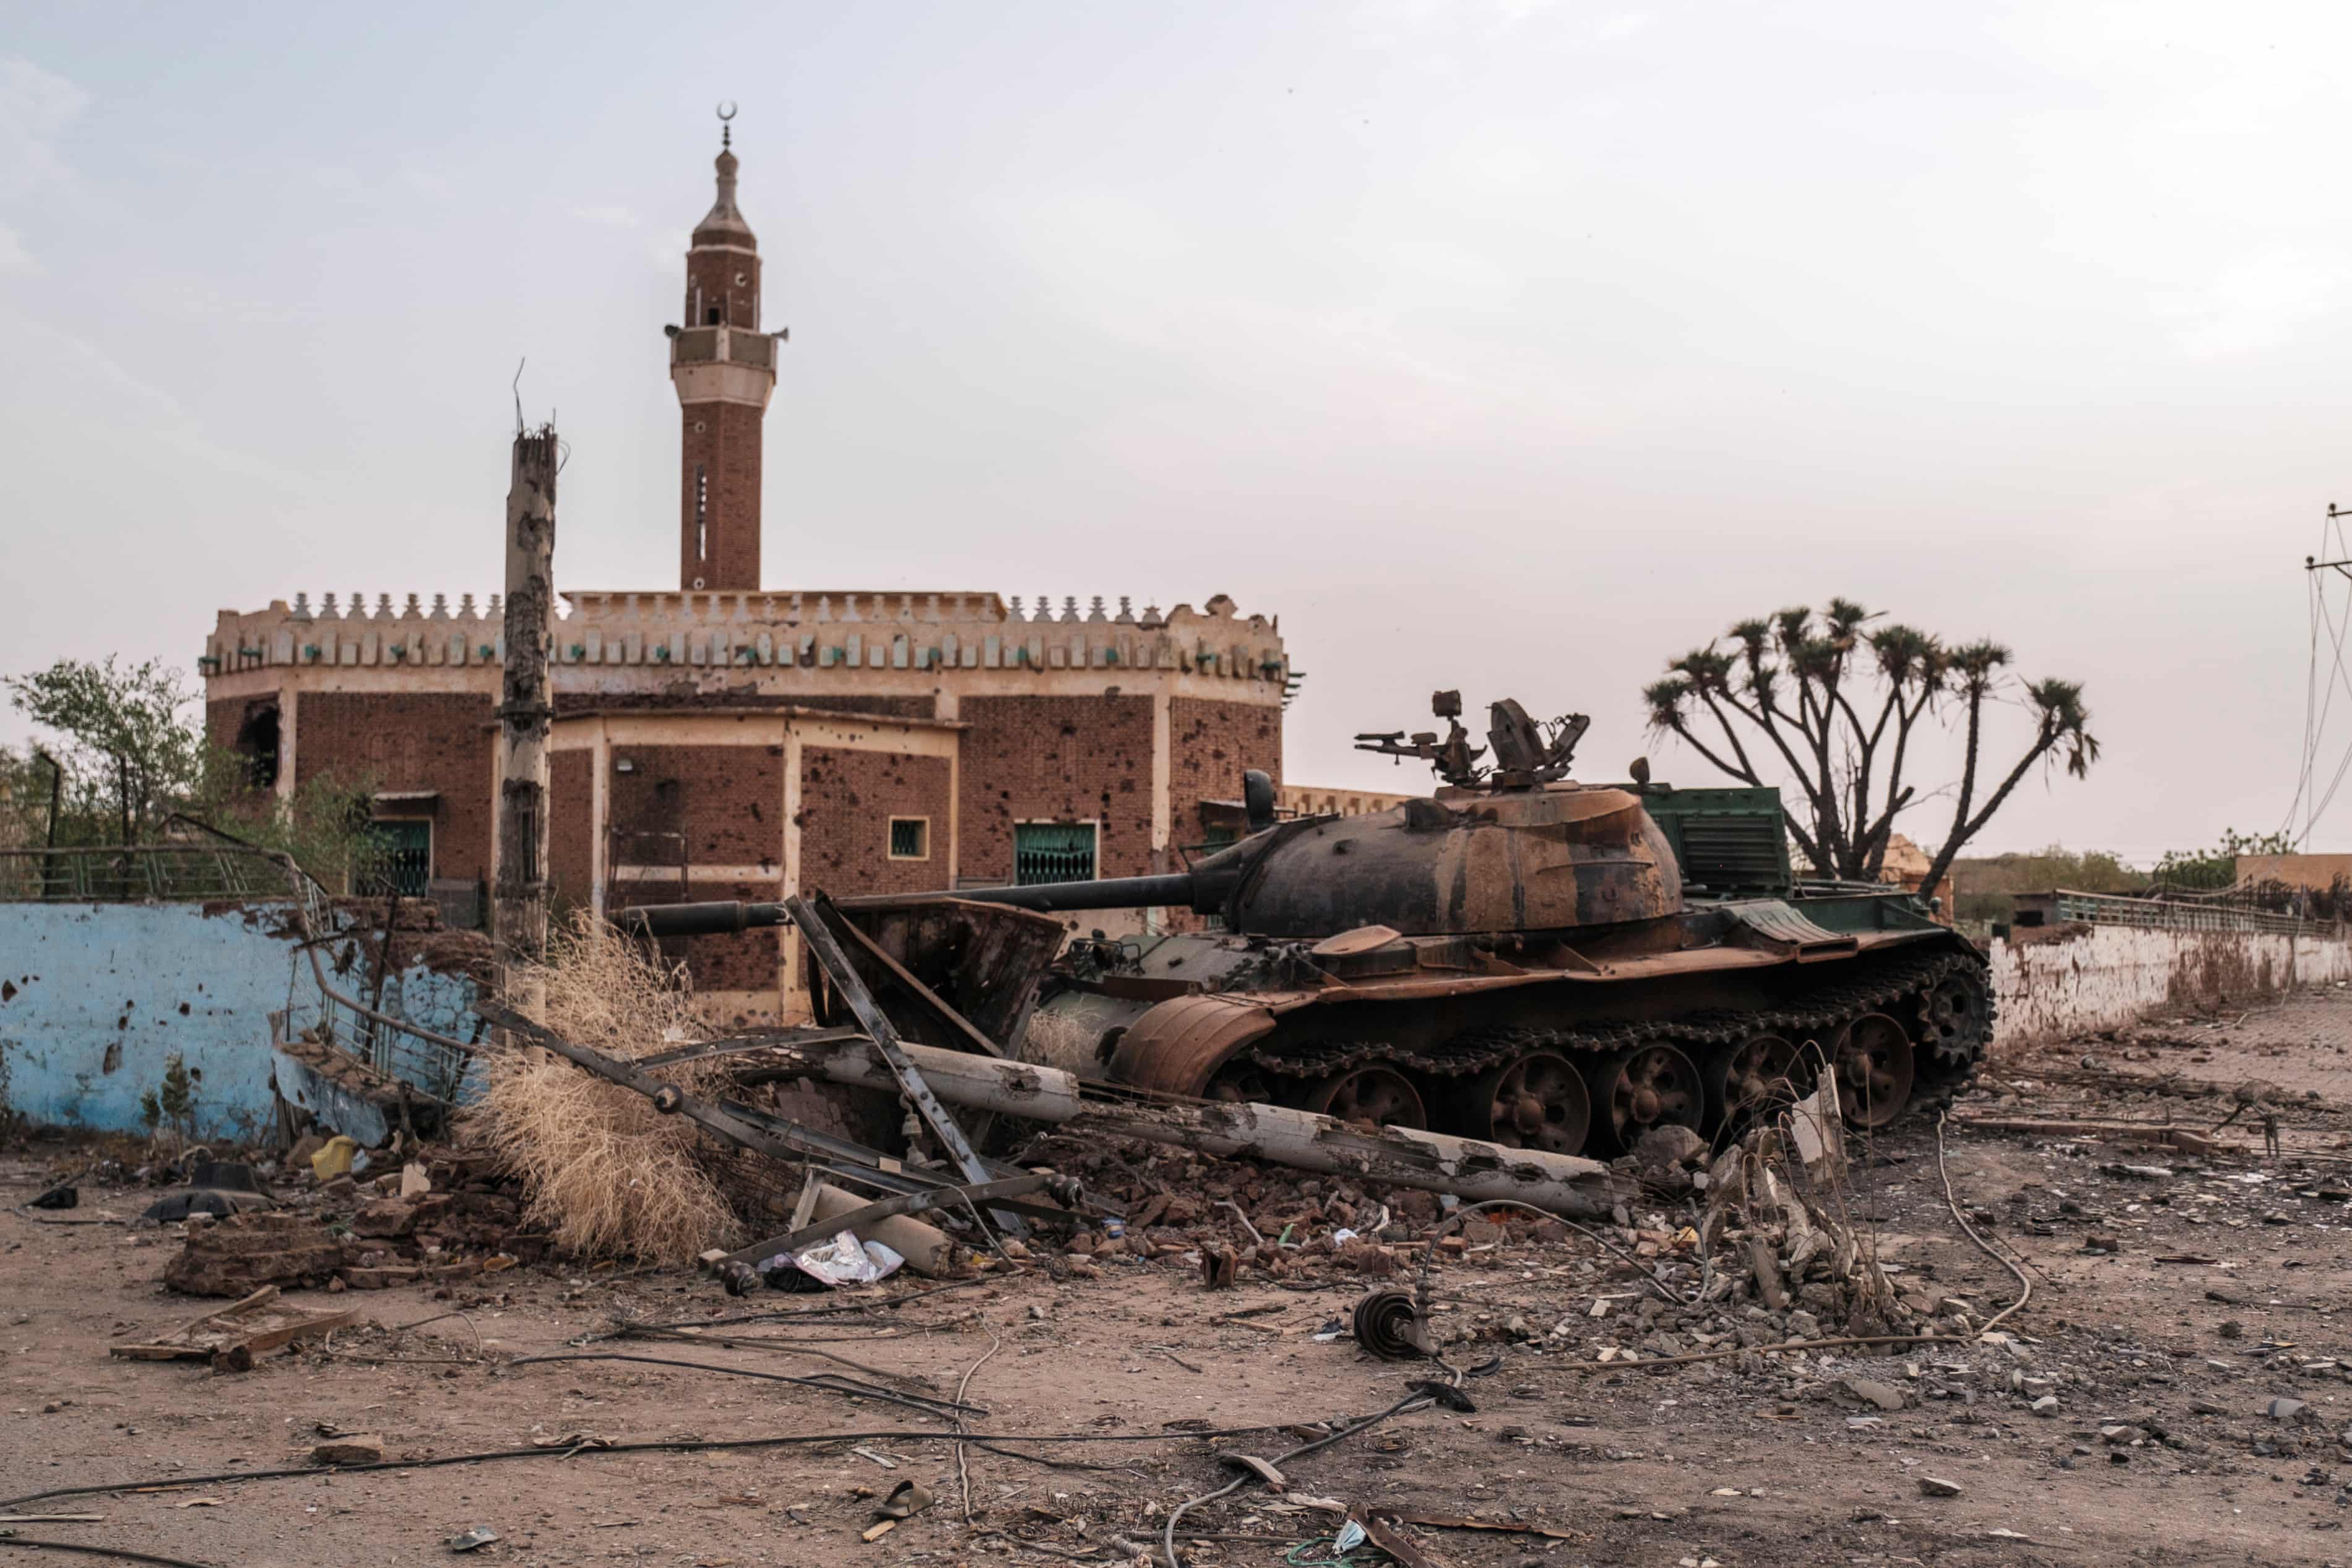 ‘Smoking gun’ evidence points to UAE involvement in Sudan civil war (theguardian.com)